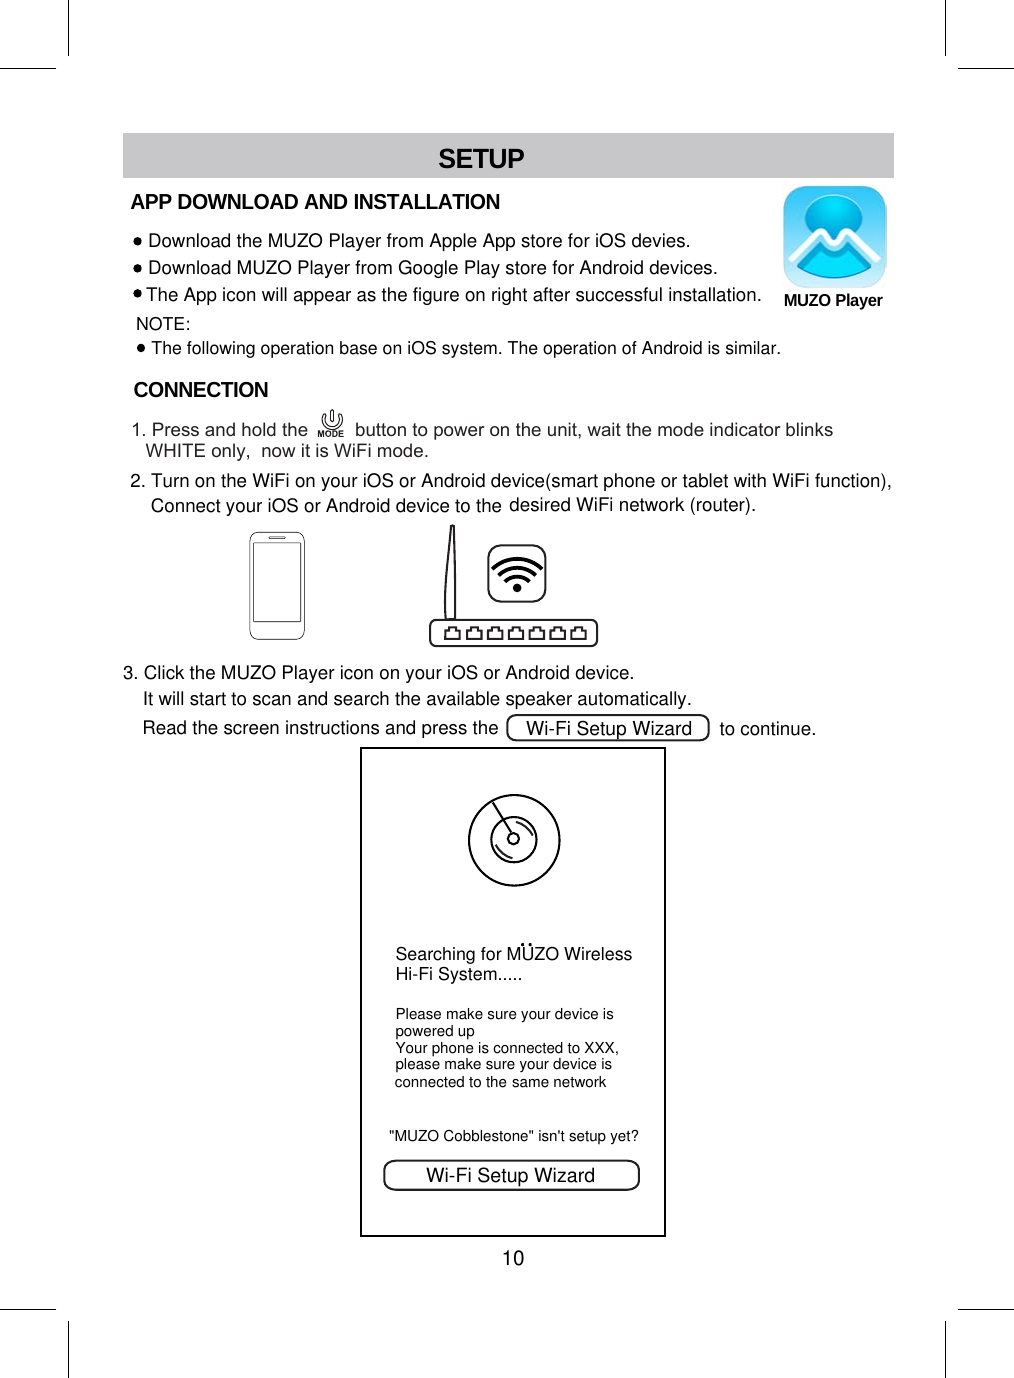 Concierge manual pdf